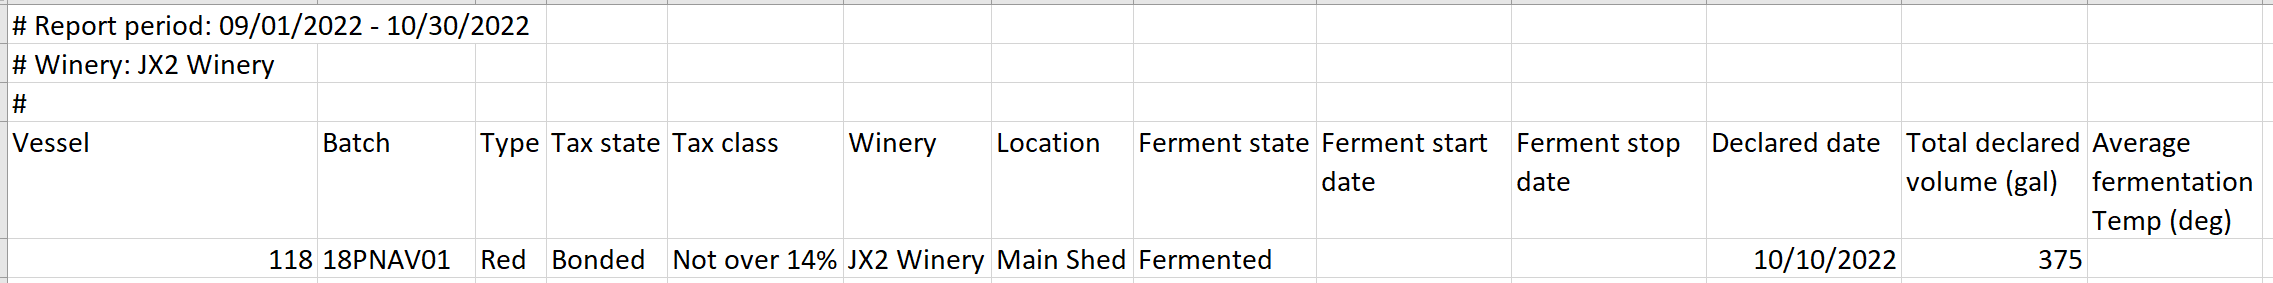 Ferment_Details_Report_-_Example_1.png